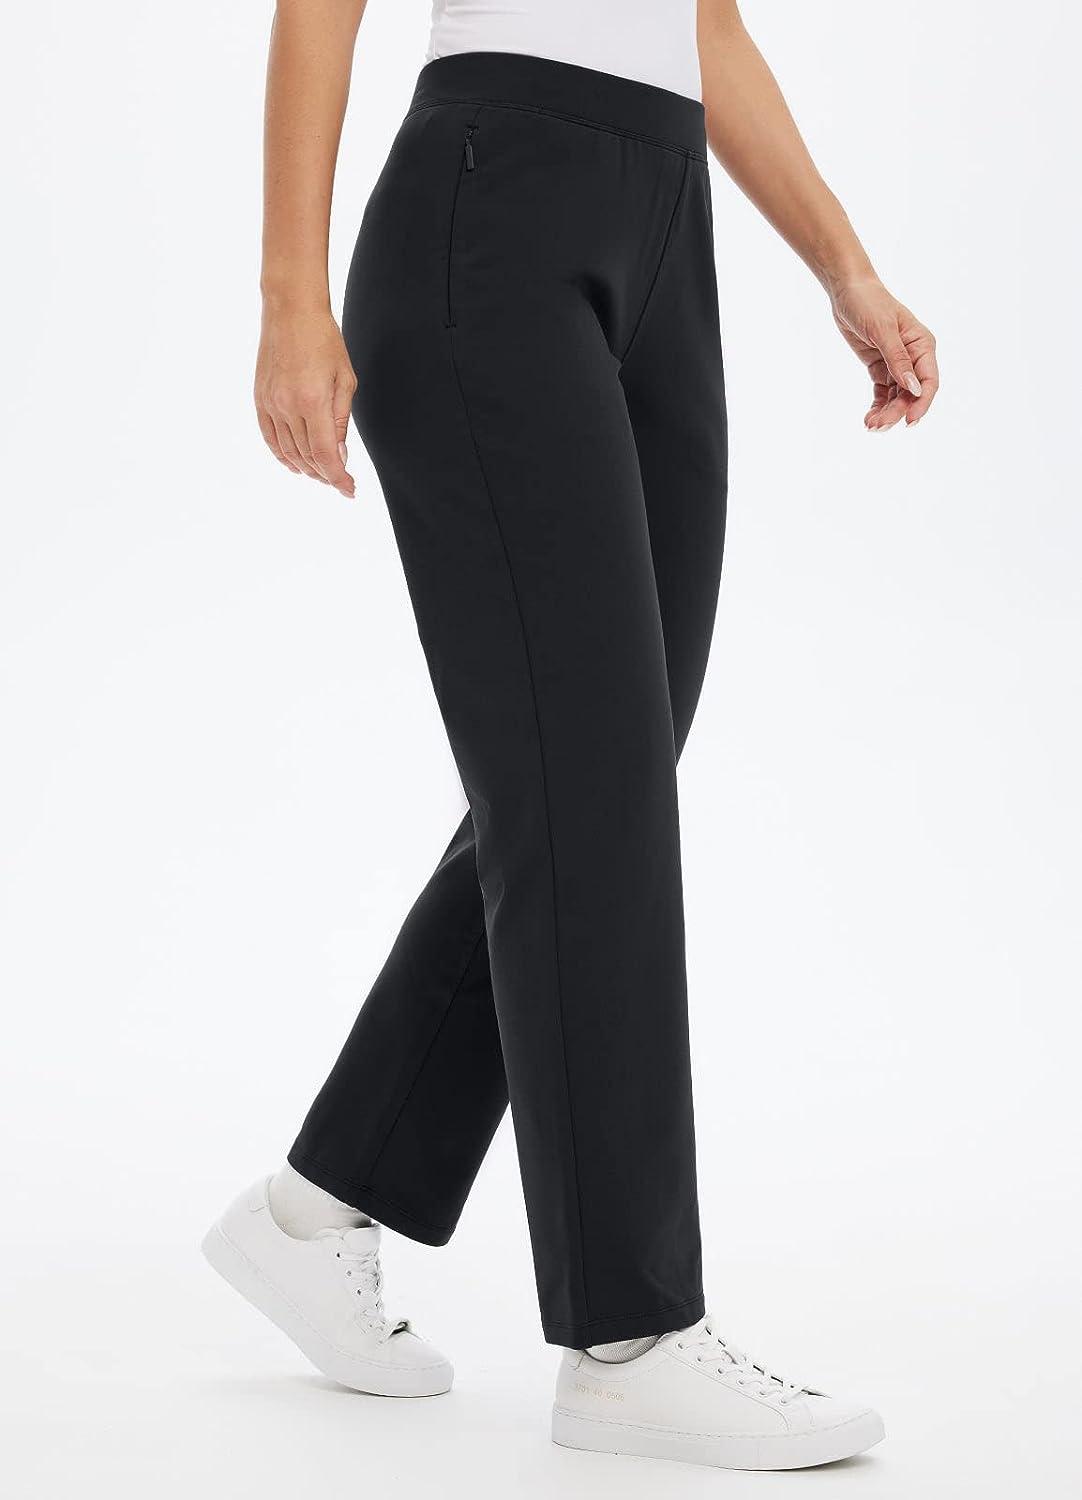 BALEAF Women's Fleece Lined Pants Straight Leg Sweatpants Pull-on Dress  Pants with Zipper Pockets Athletic for Golf Running Black Large